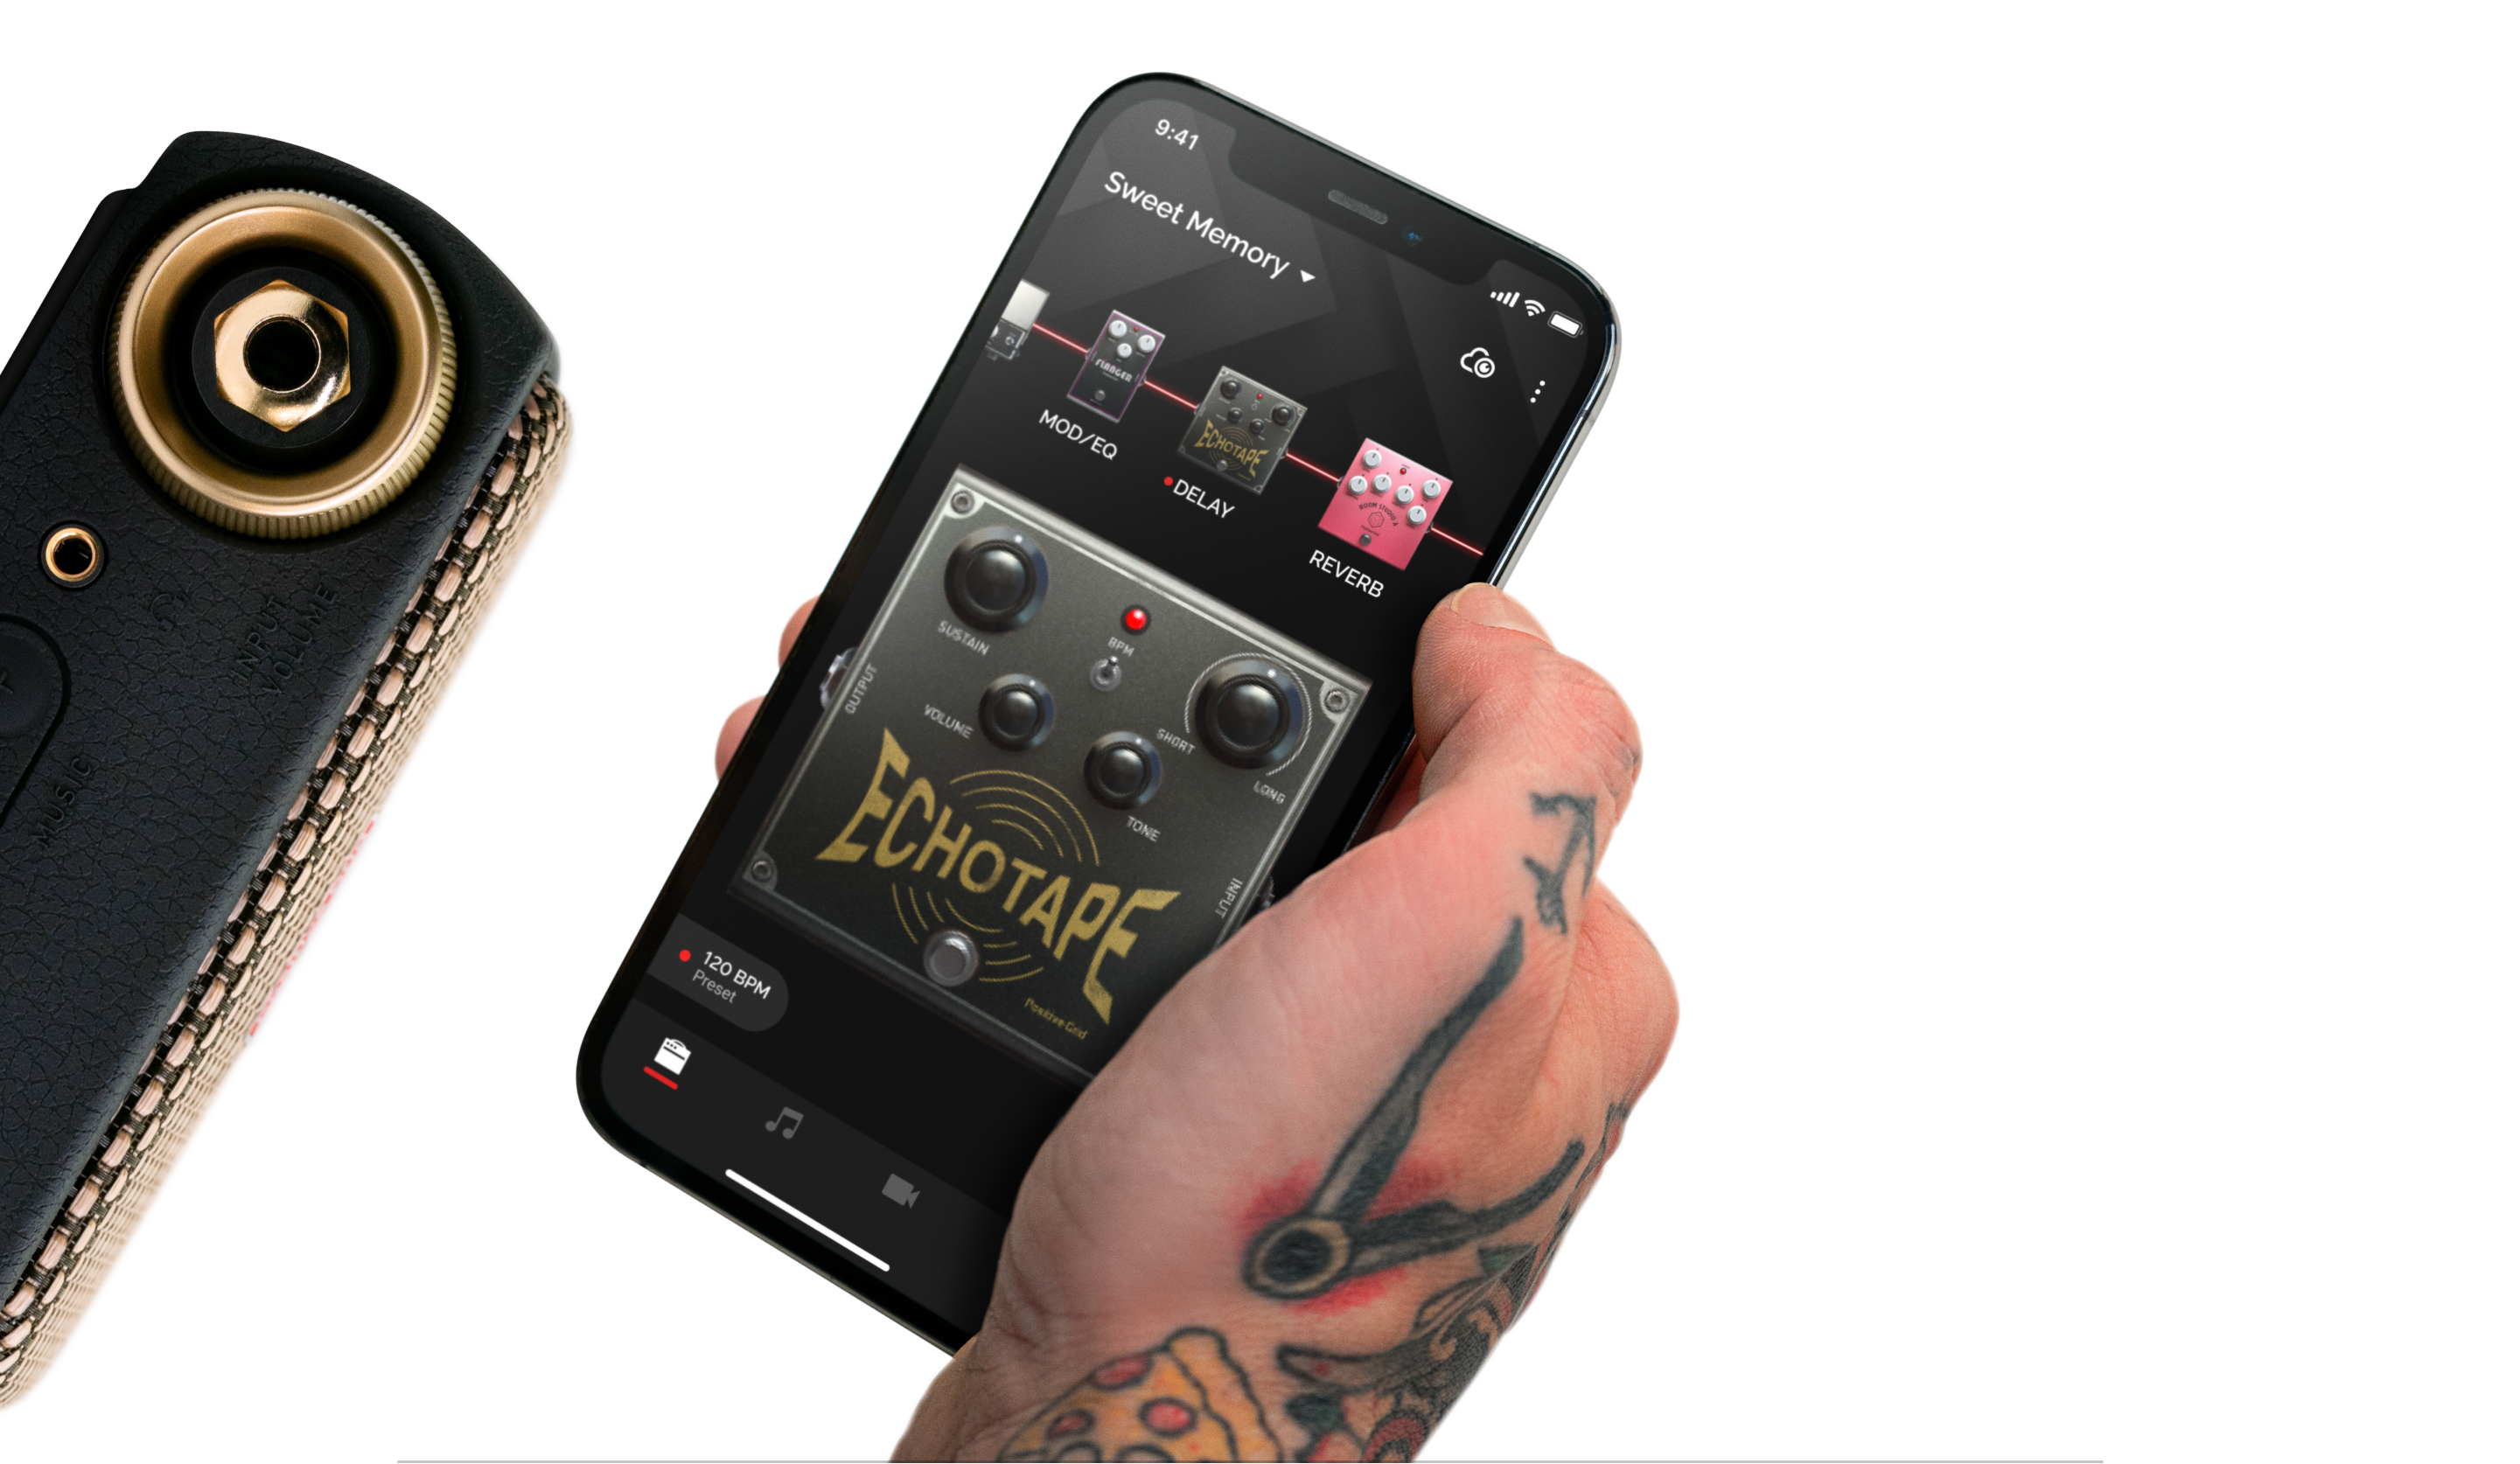 Spark GO Portable Smart Guitar Amp & Bluetooth Speaker - Positive